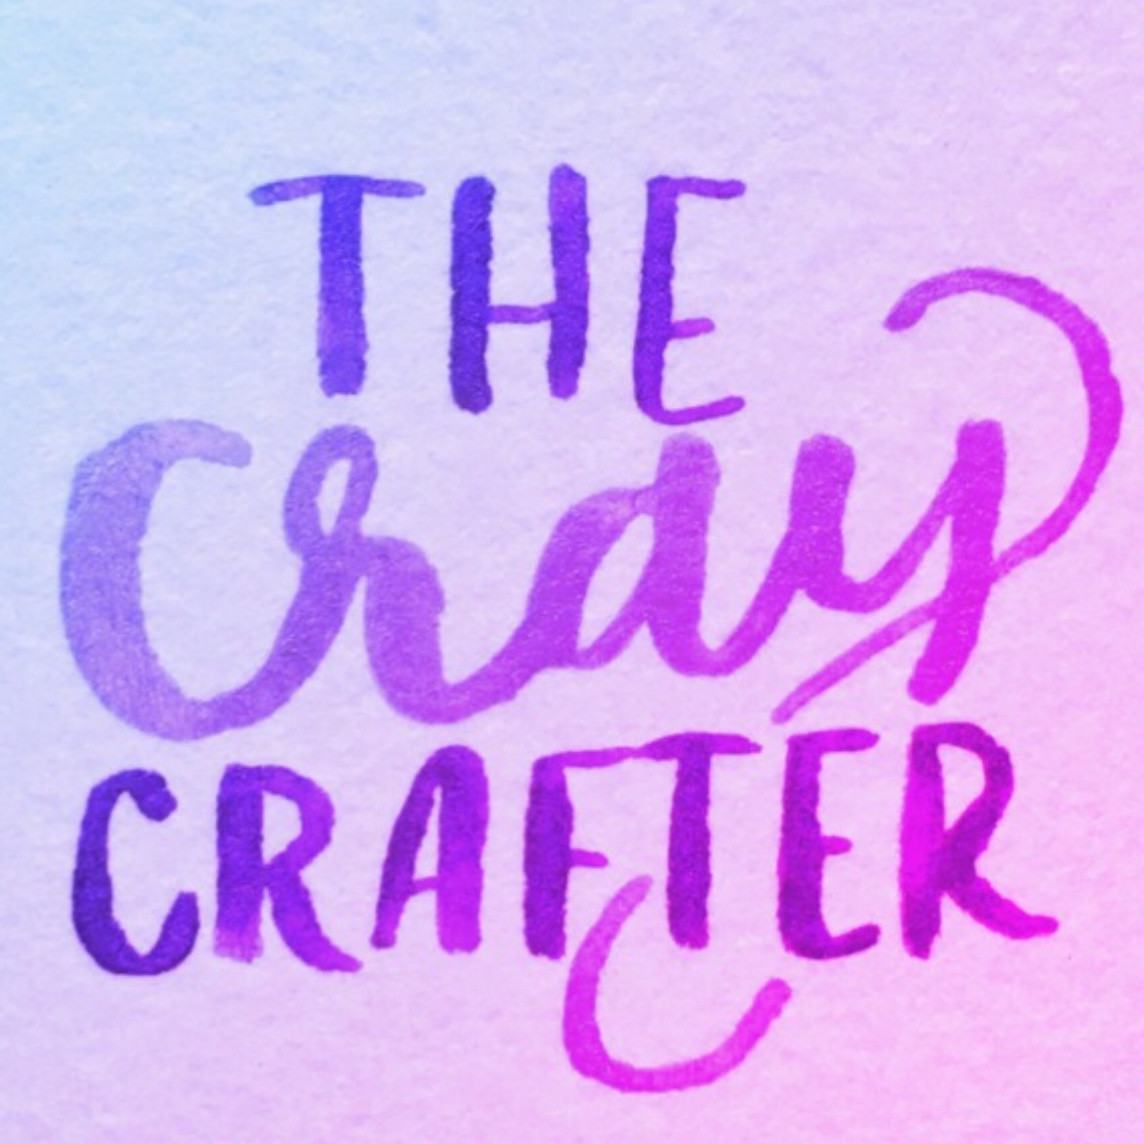 The CrayCrafter